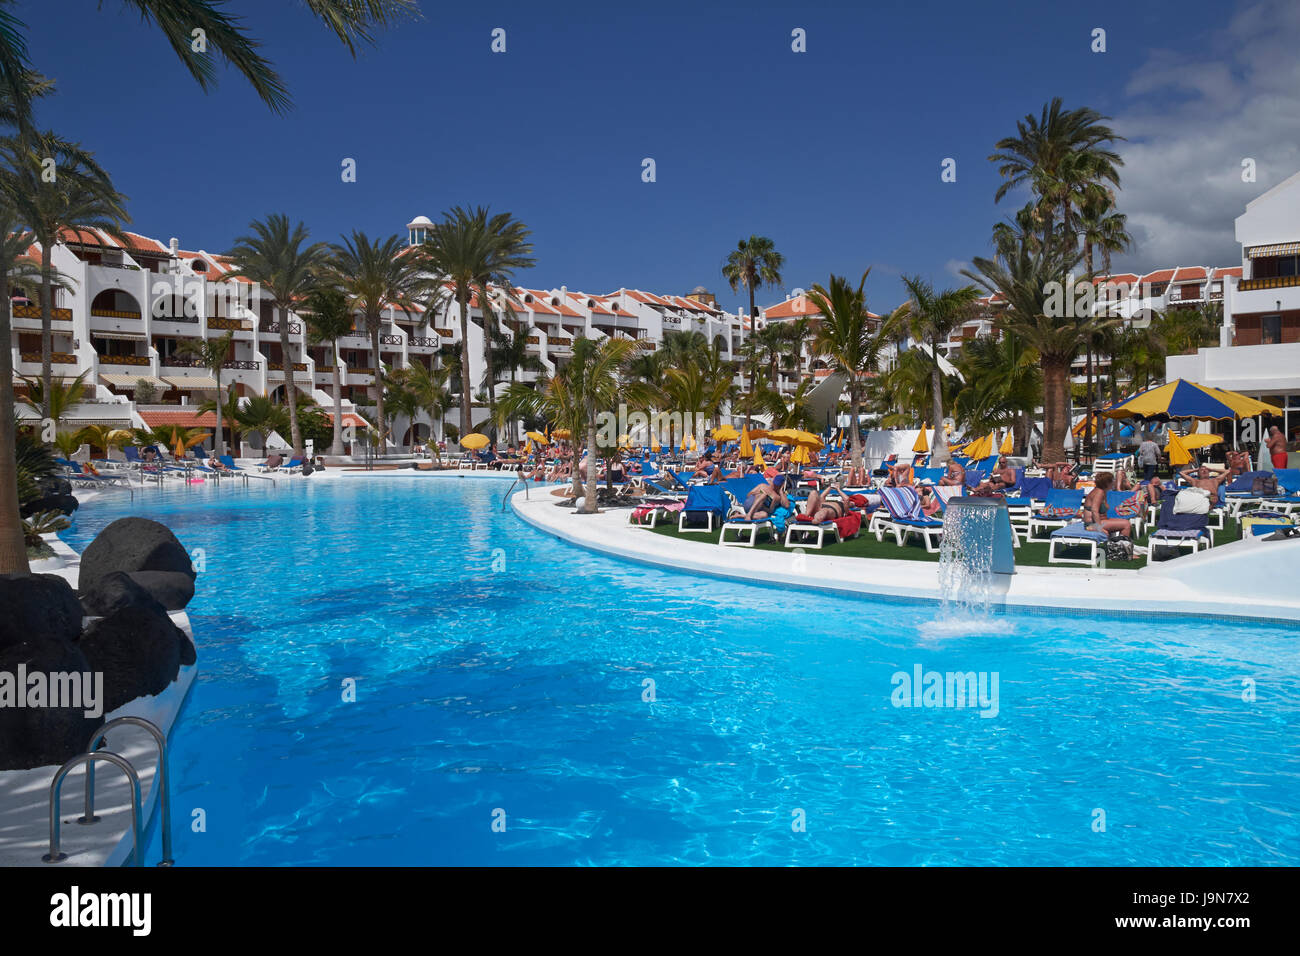 Swimming pool at Parque Santiago, Playa de las Americas, Tenerife, Spain. Stock Photo